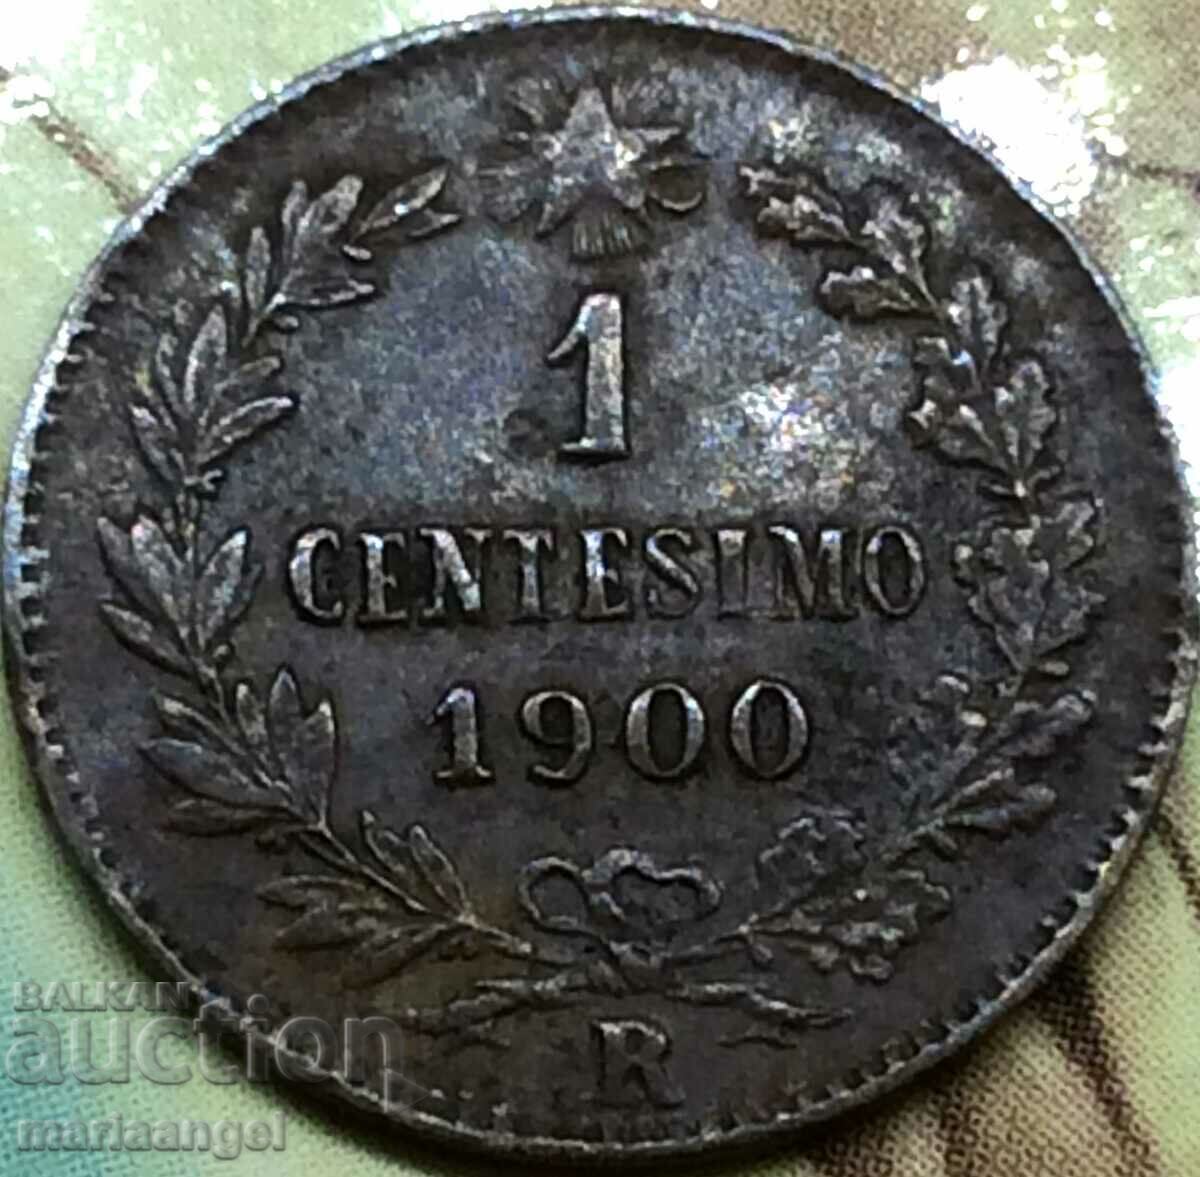 1 centesimo 1900 centesimo Italy R - Rome King Umberto I 4